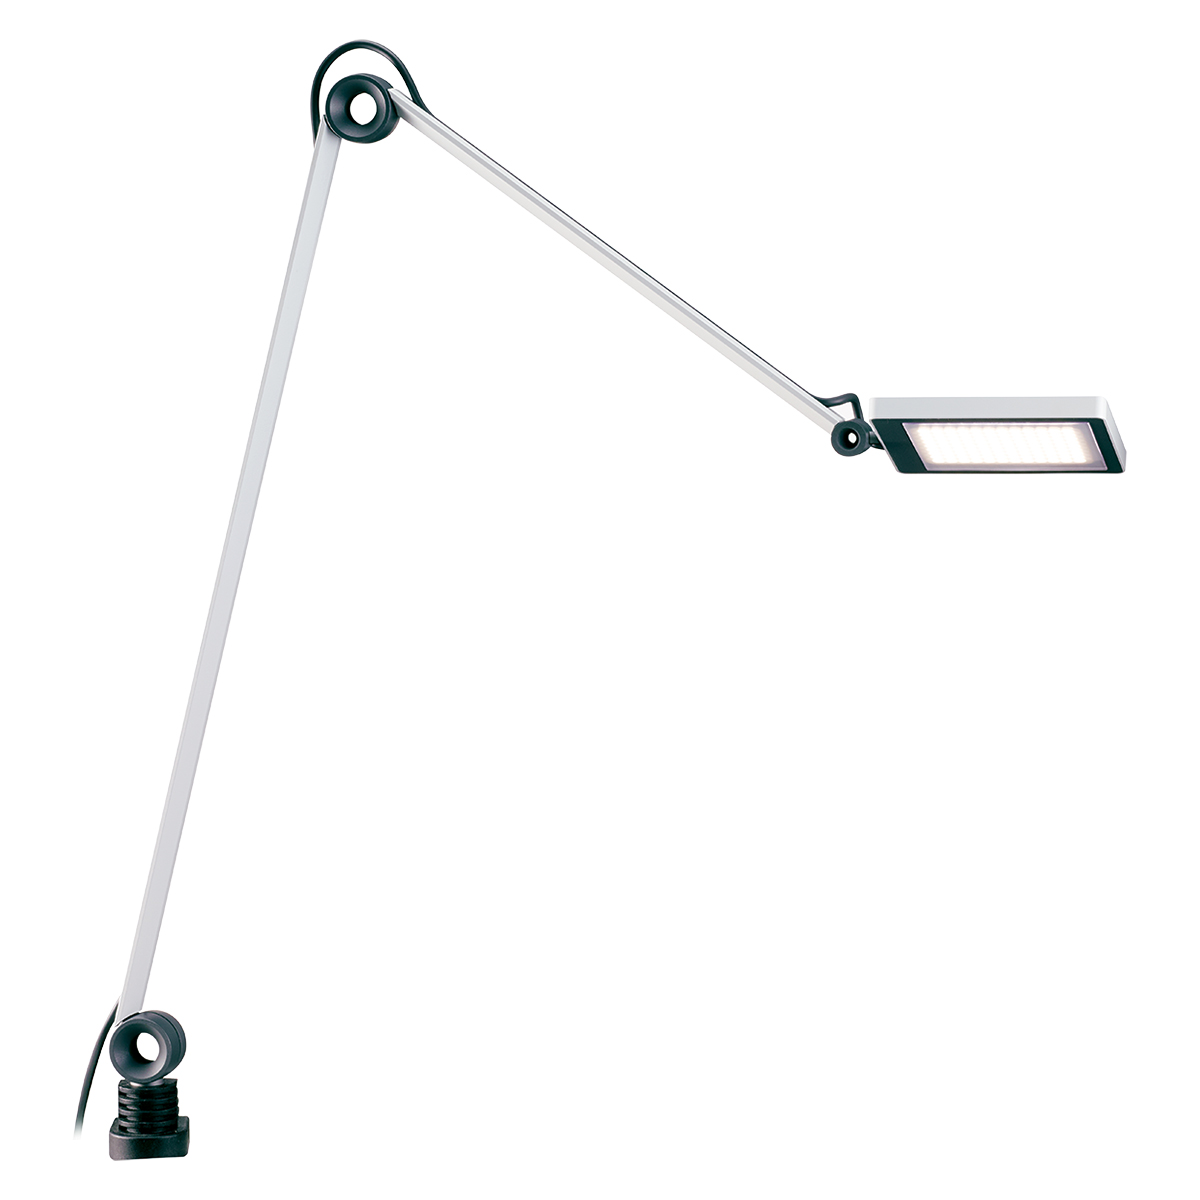 Luminaire Para.Mi, 7 W, 4000 K, silver metallic, articulated arm, rectangular luminaire head, table base